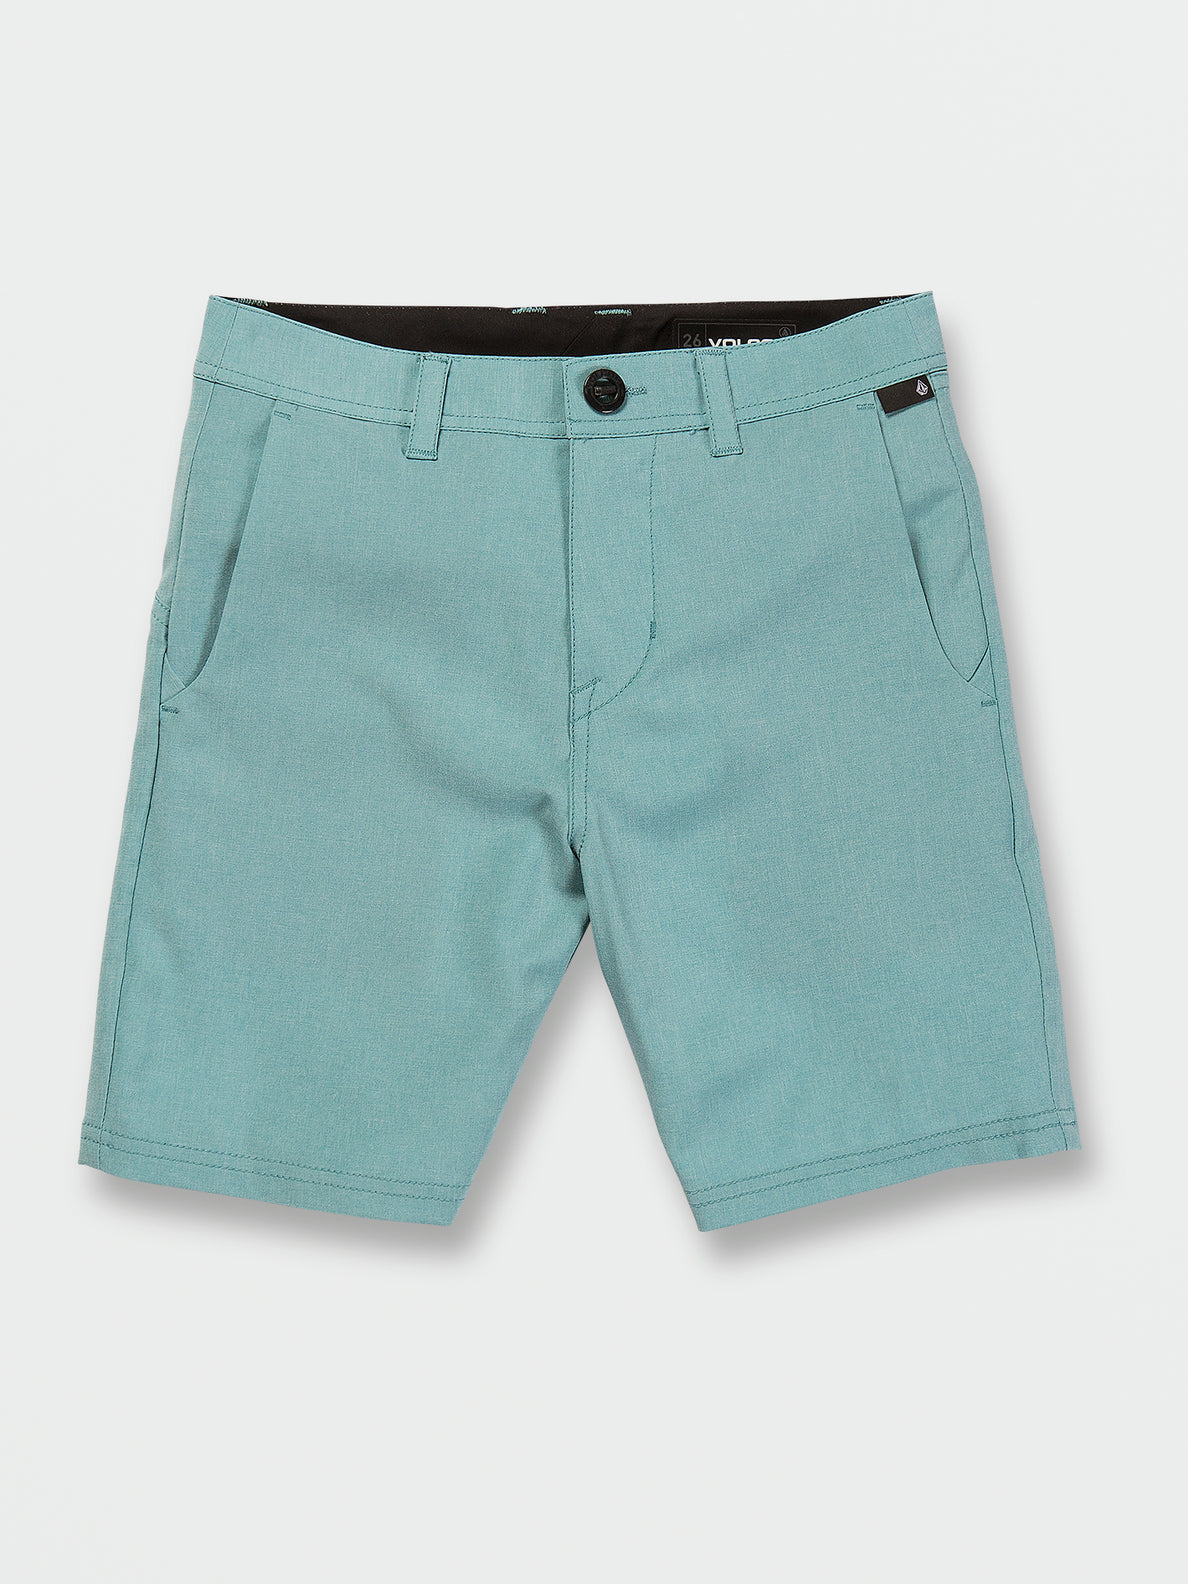 Big Boys Frickin Cross Shred Static Shorts - Cali Blue Heather (C3212306_CBL) [F]